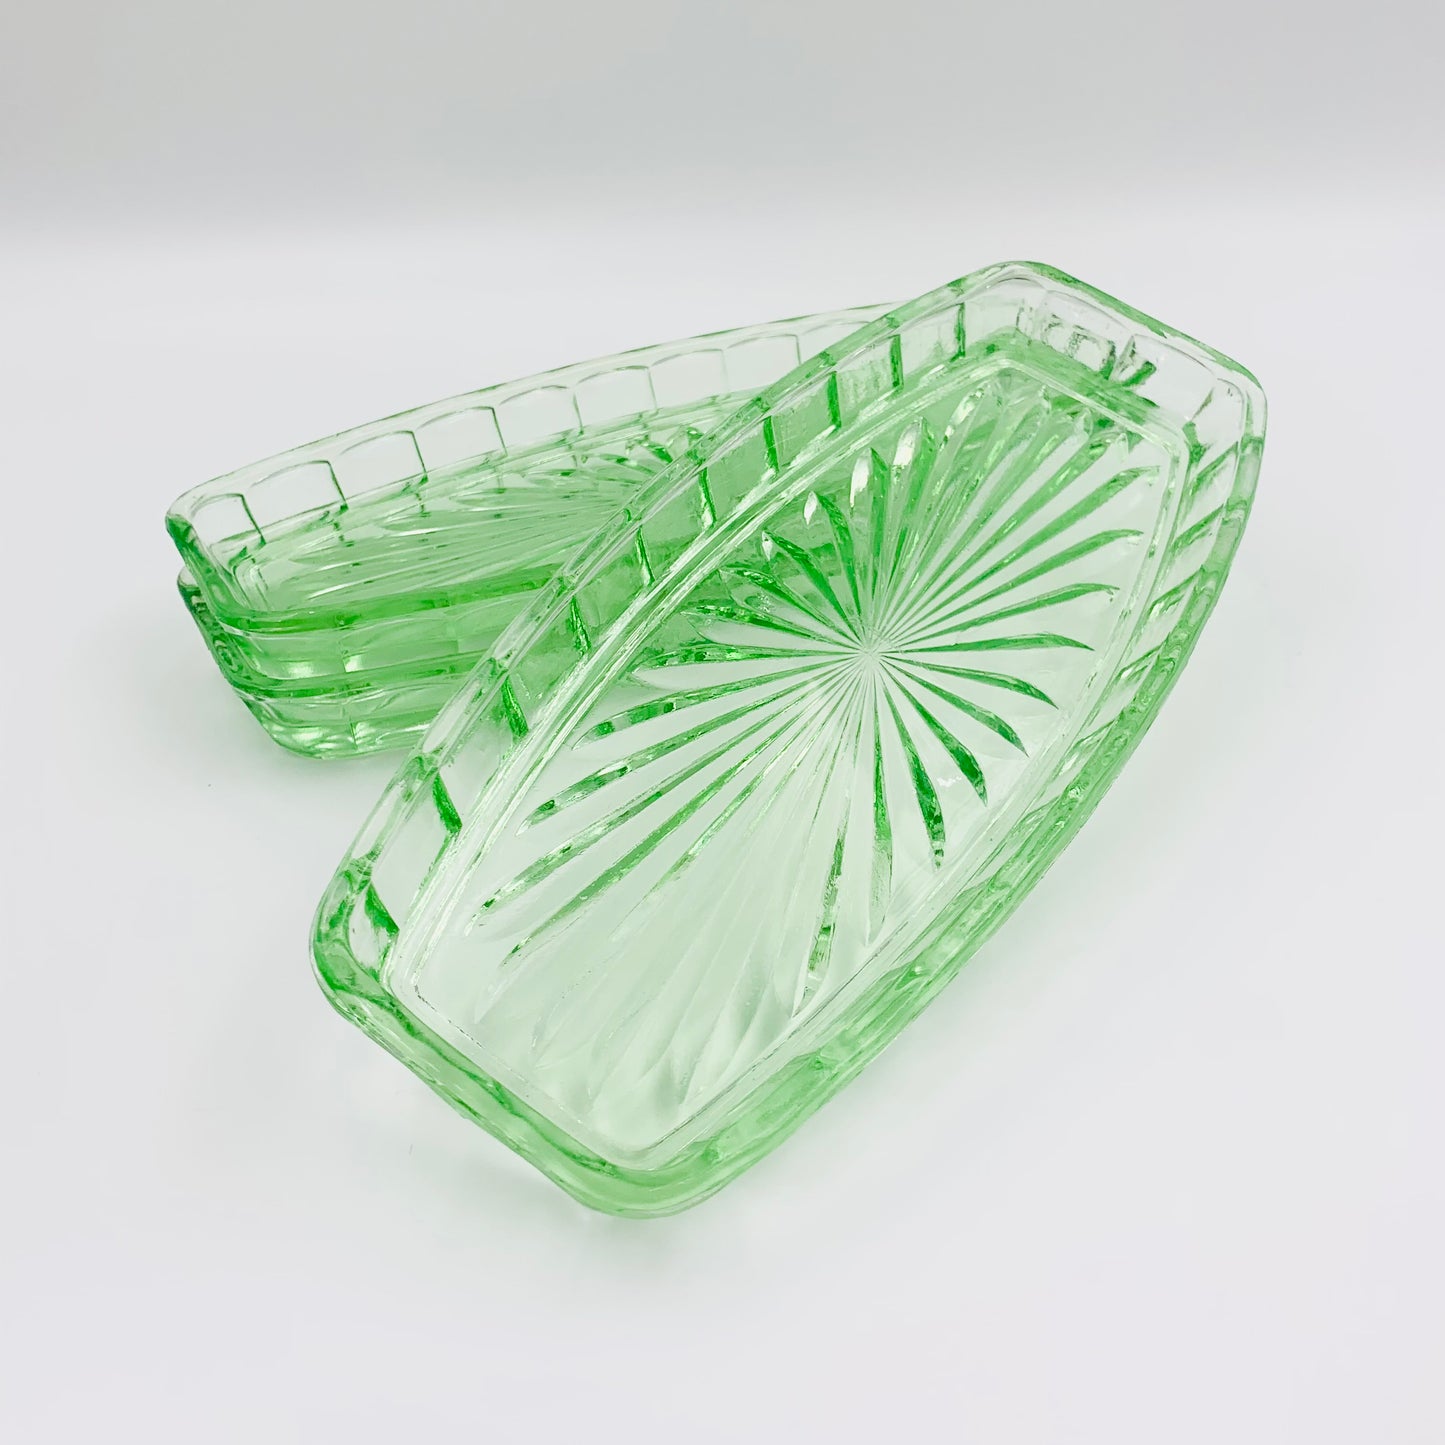 Green depression glass sandwich/serving plate